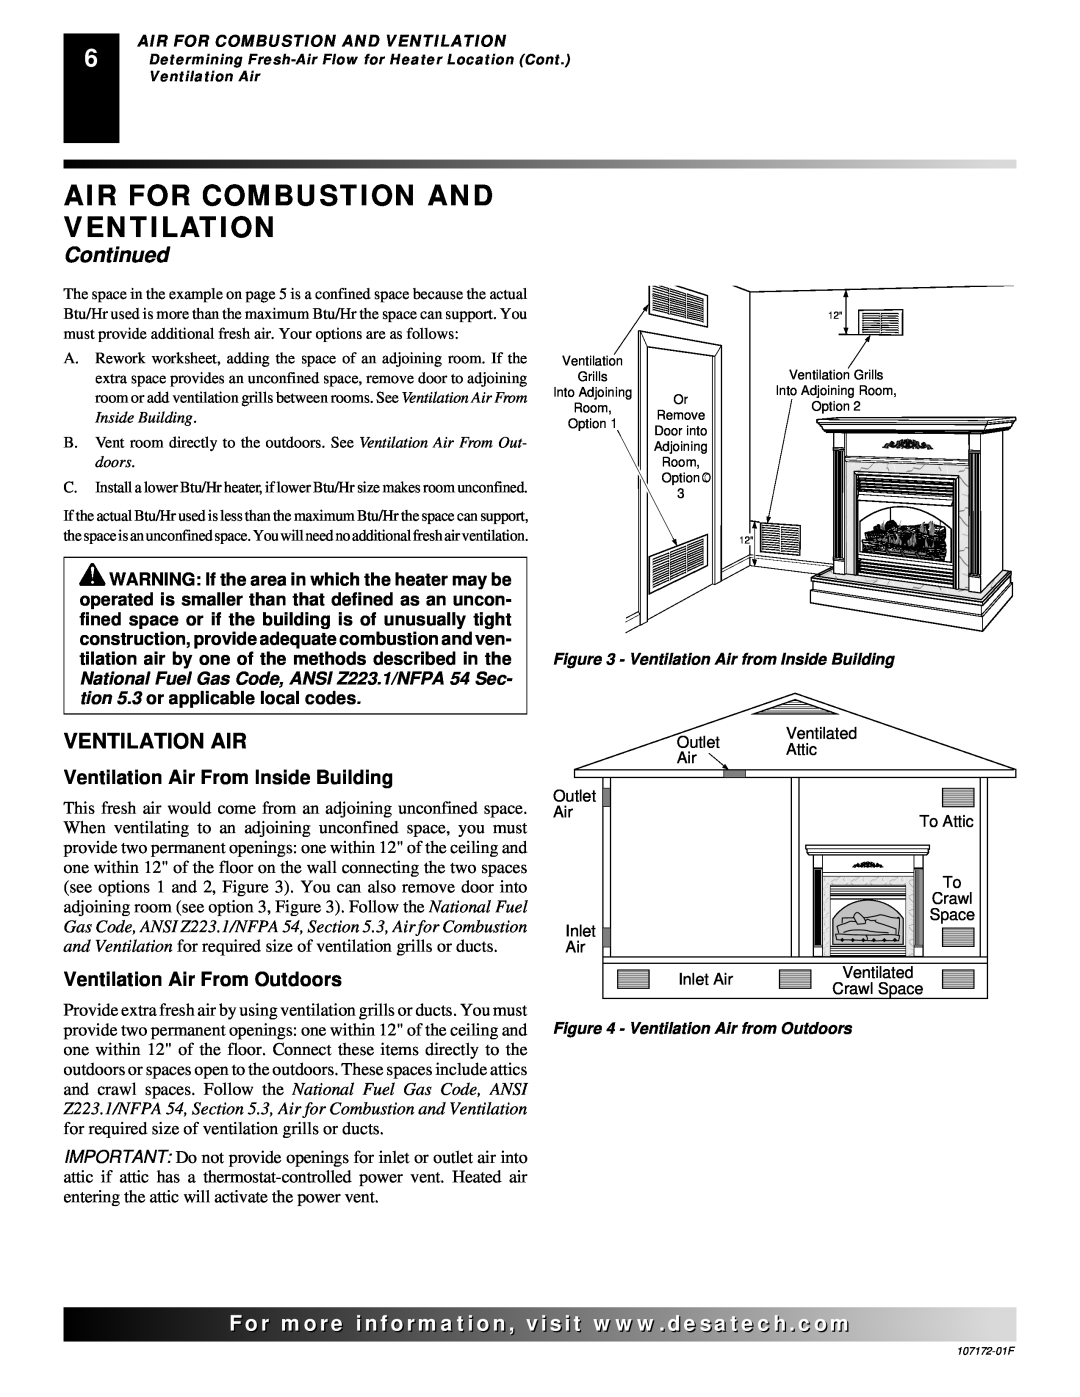 Desa EFS33PR Ventilation Air From Inside Building, Ventilation Air From Outdoors, Air For Combustion And Ventilation 